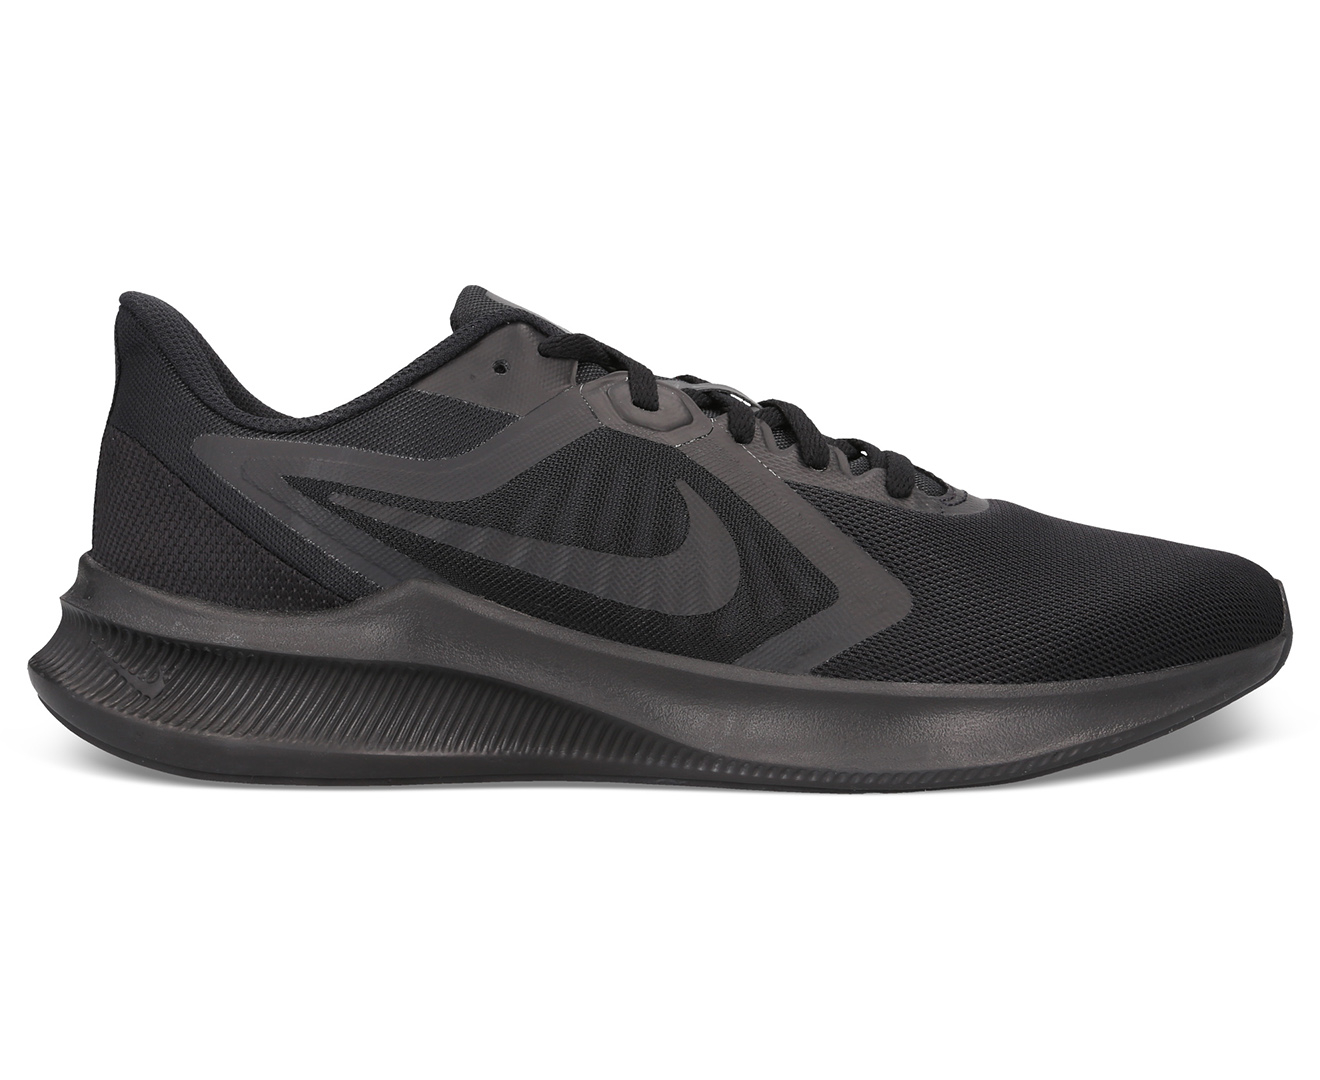 Nike Men's Downshifter 10 Running Shoes - Black/Iron Grey | Catch.co.nz